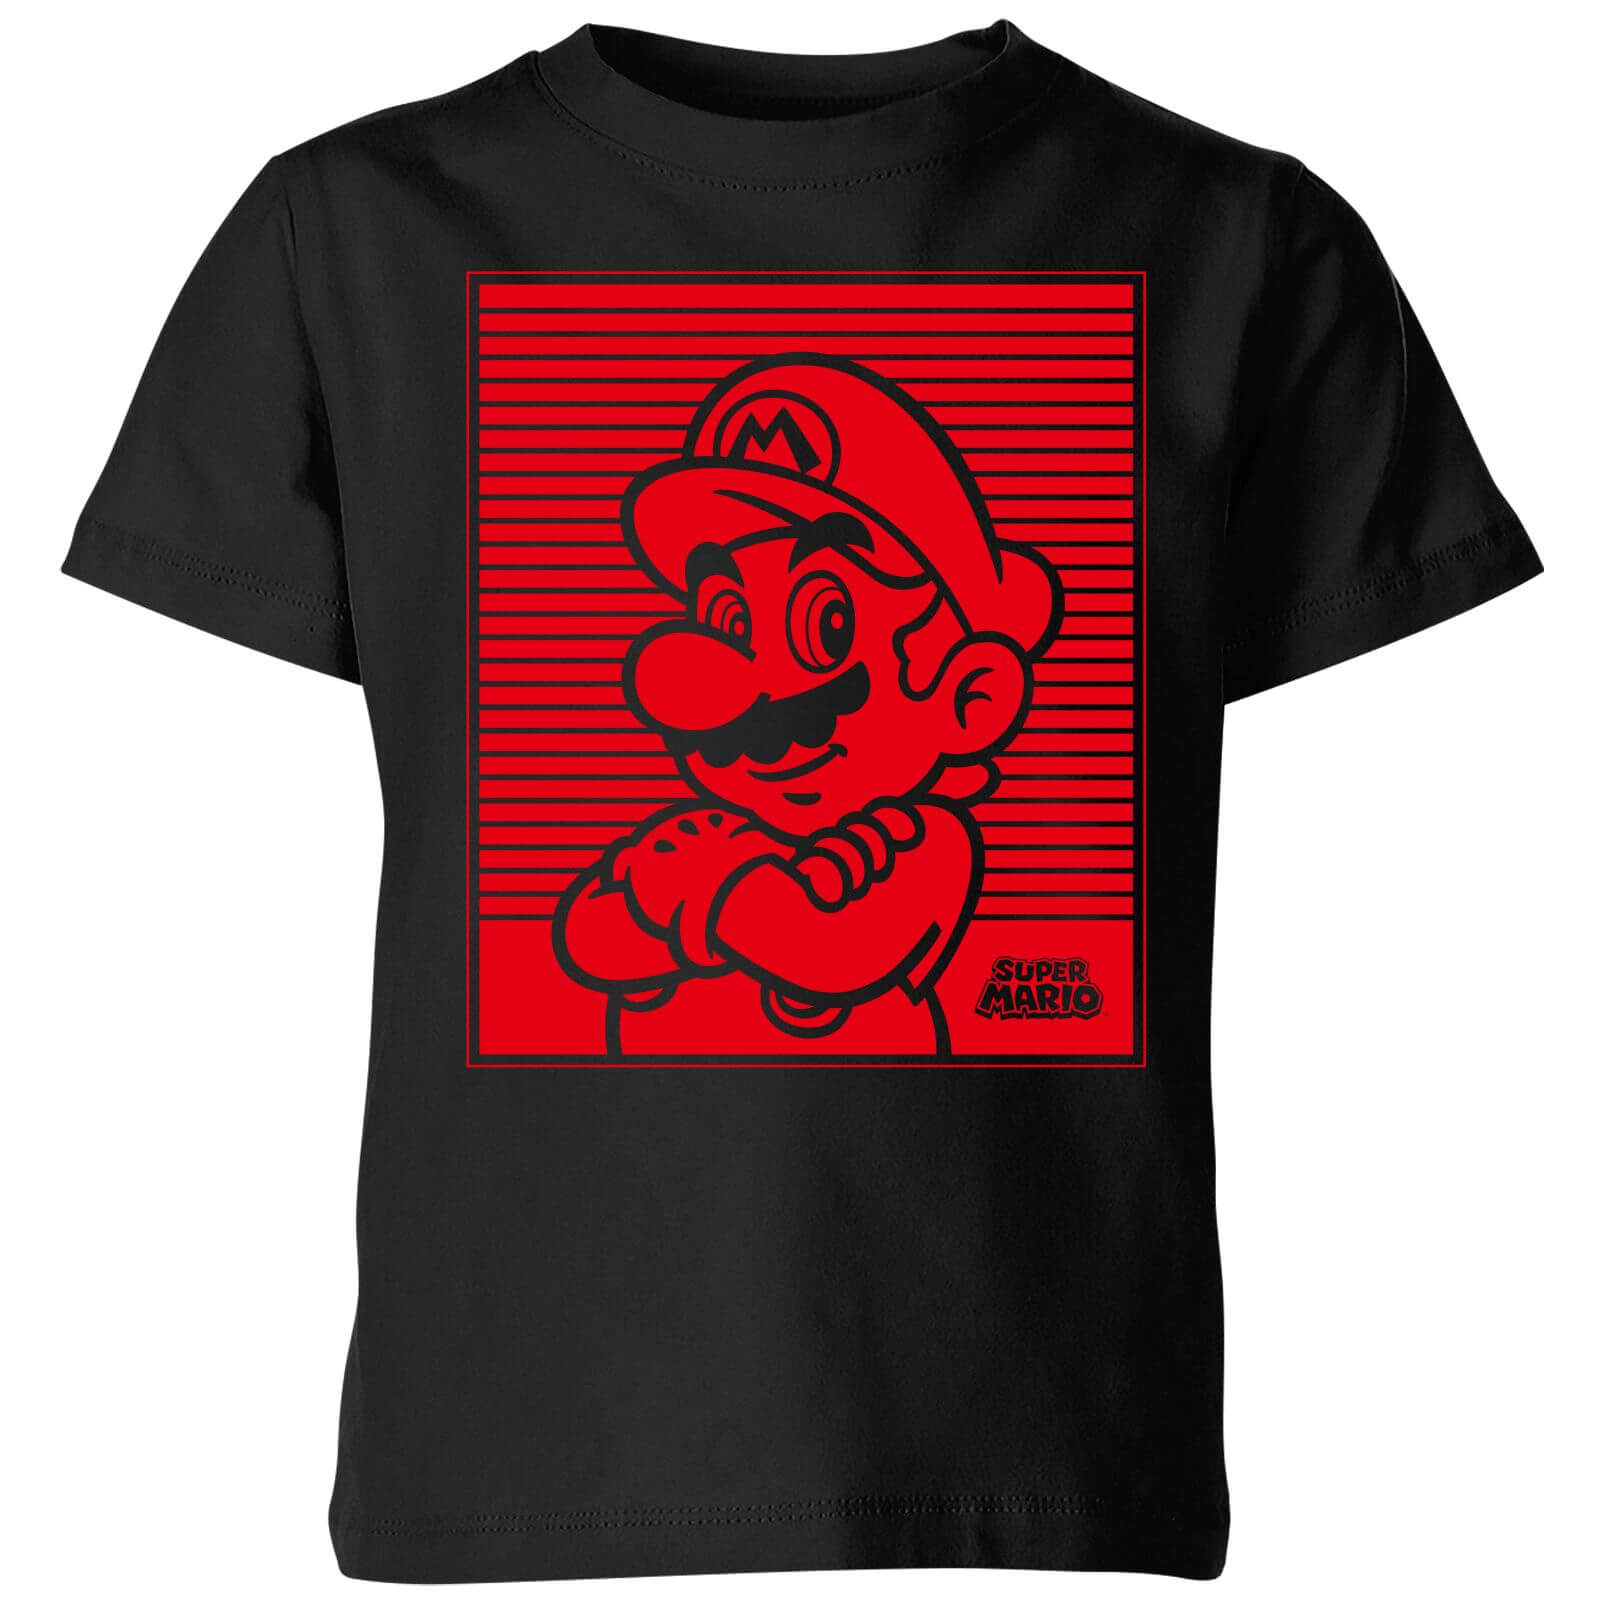 Nintendo Super Mario Mario Retro Line Art Kid's T-Shirt - Black - 9-10 Years - Black